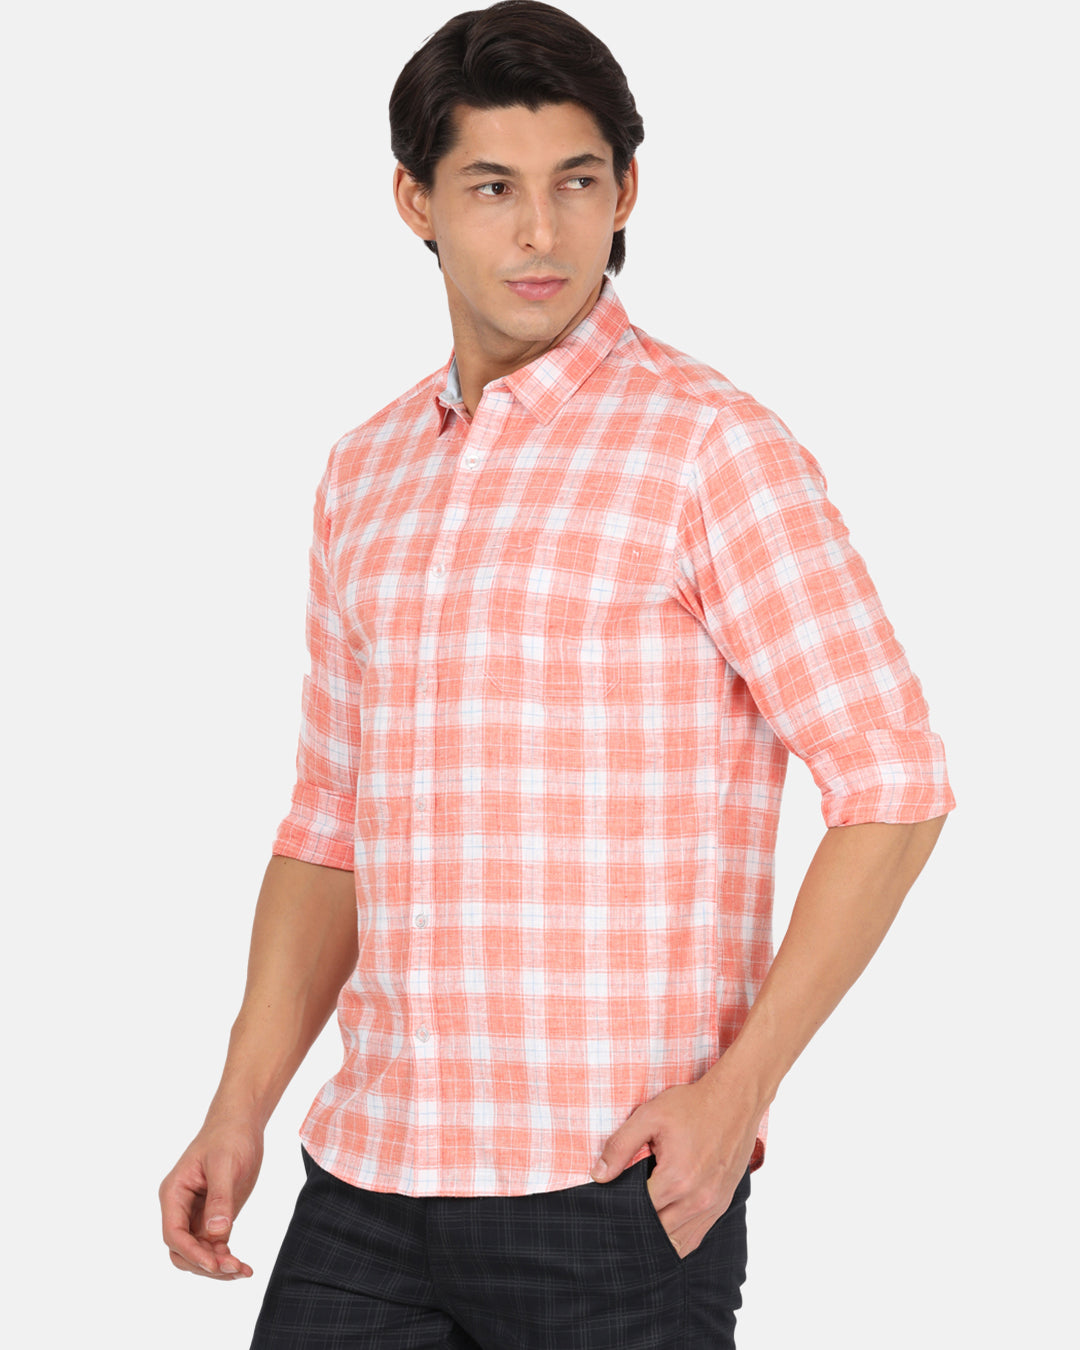 Crocodile Men's Casual Full Sleeve Comfort Fit Checks Light Orange with Collar Shirt